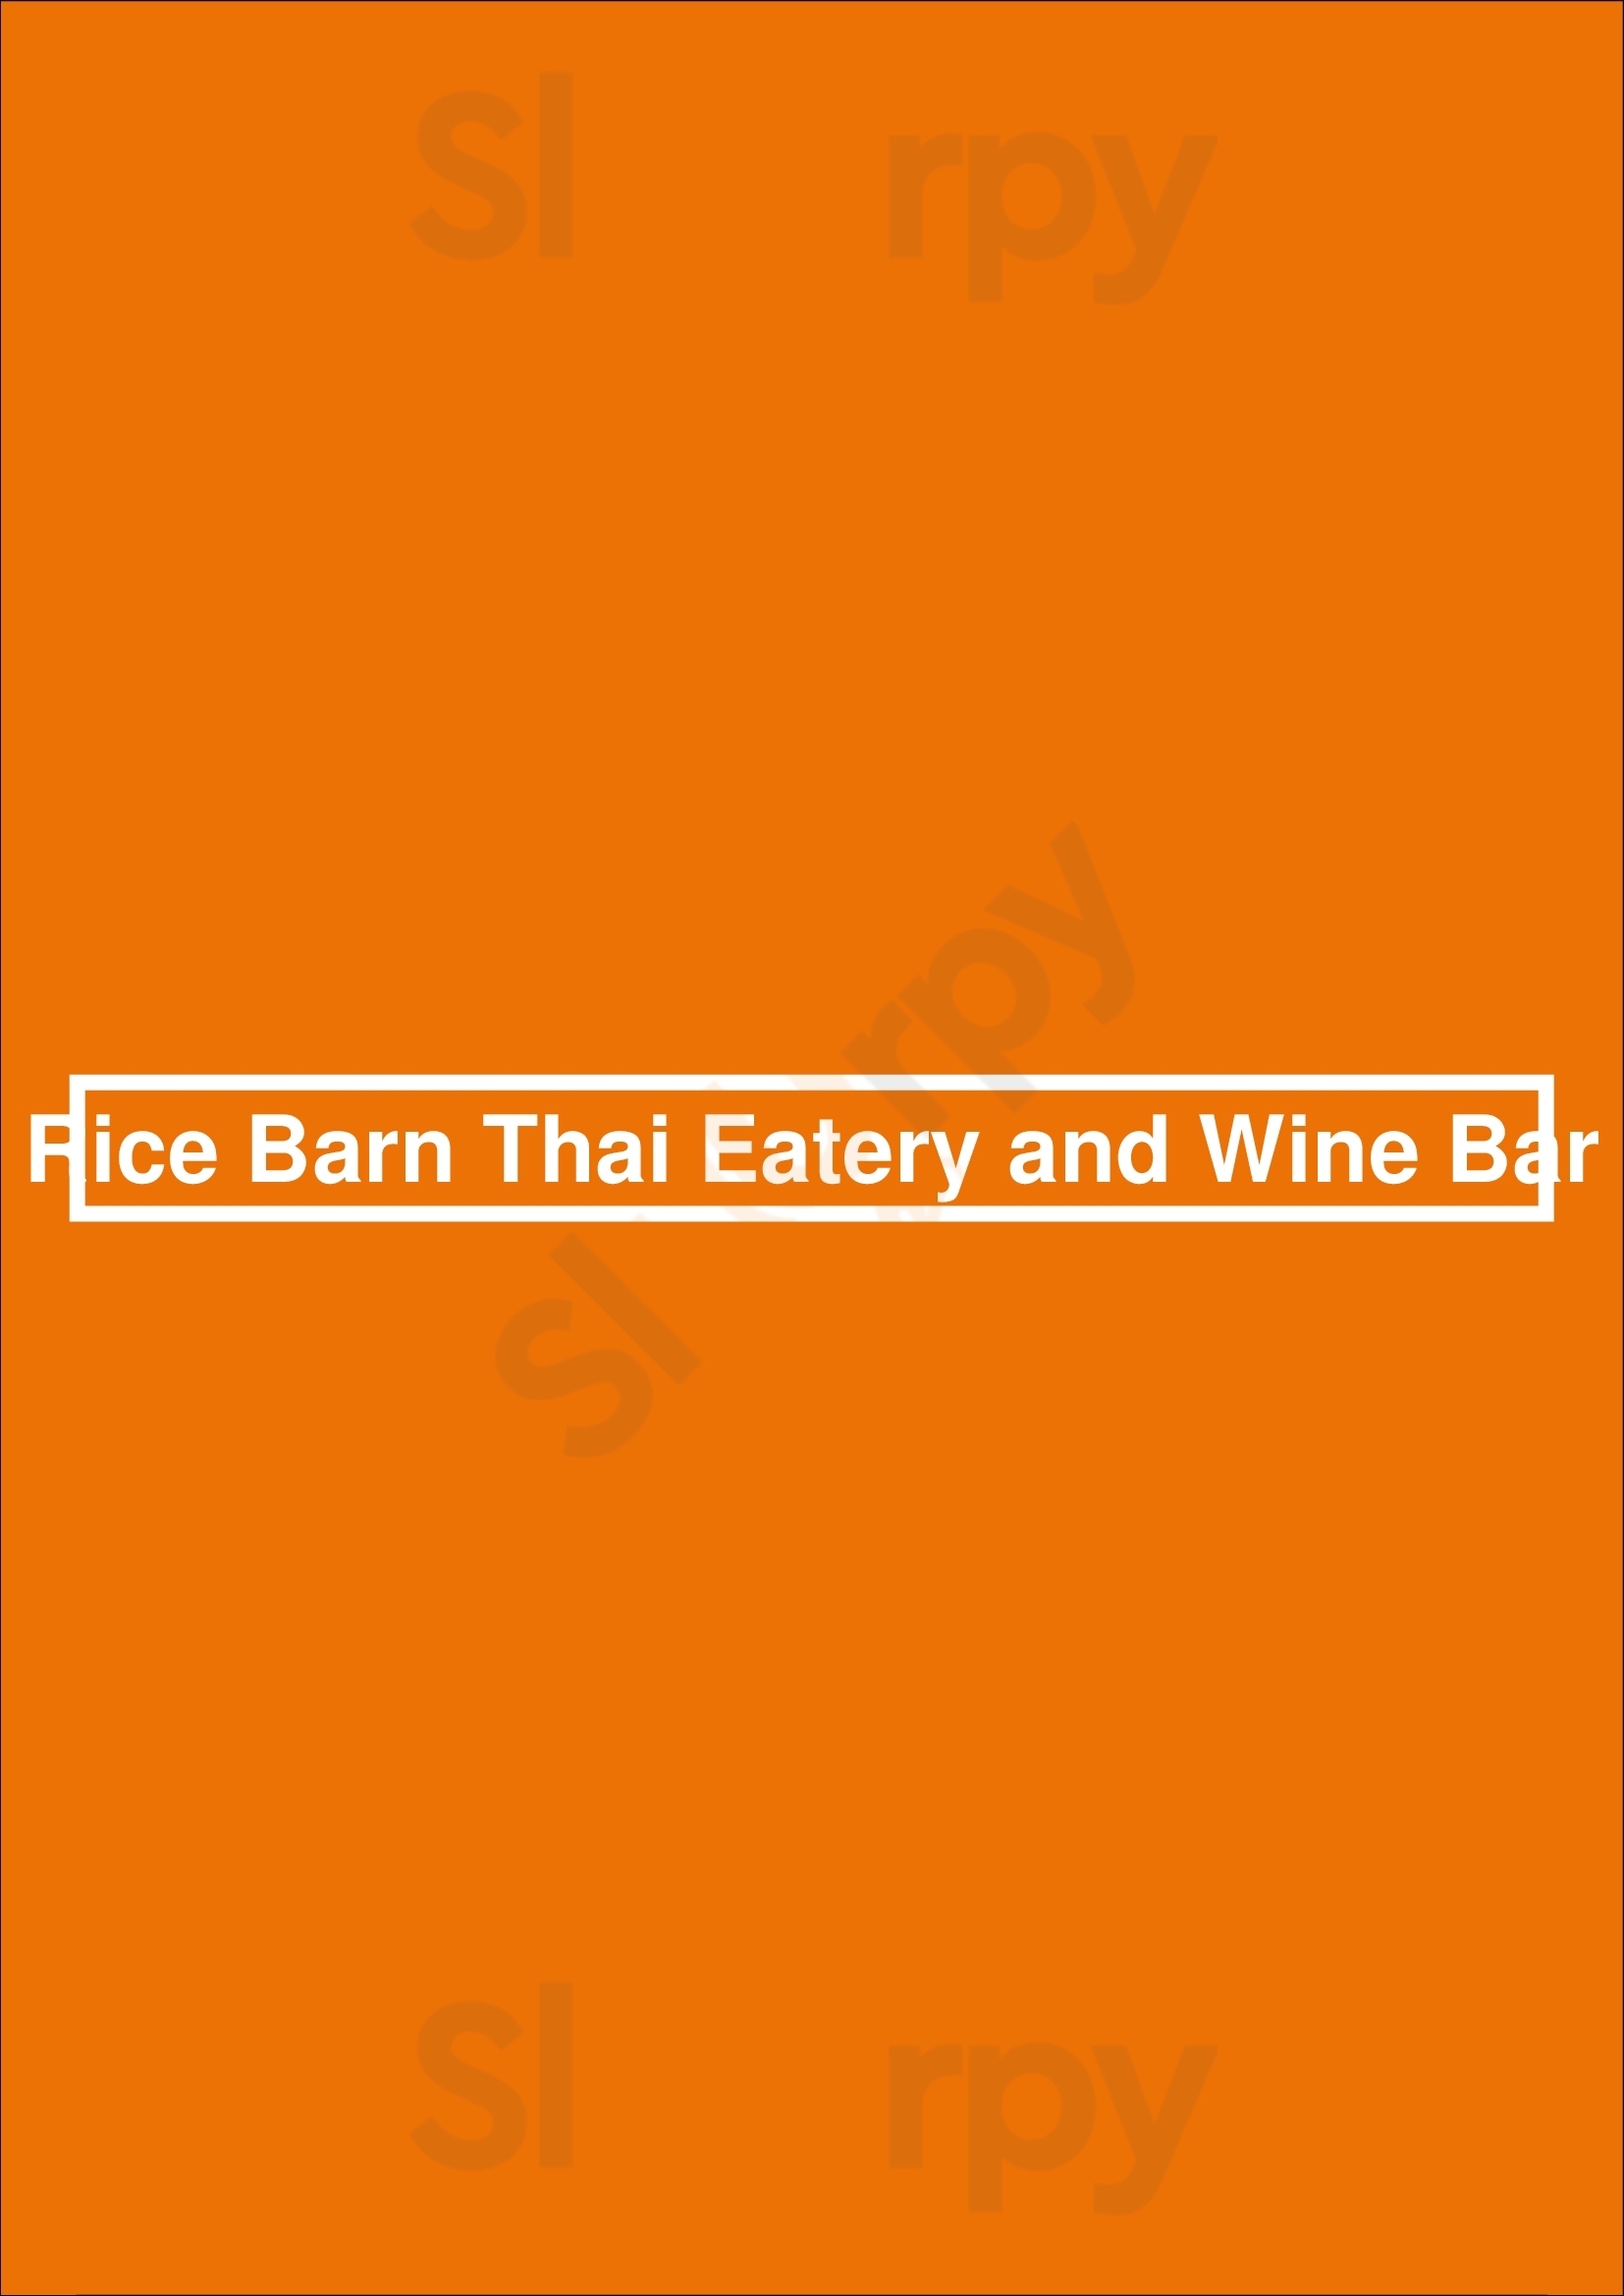 Rice Barn Thai Eatery And Wine Bar Vacaville Menu - 1